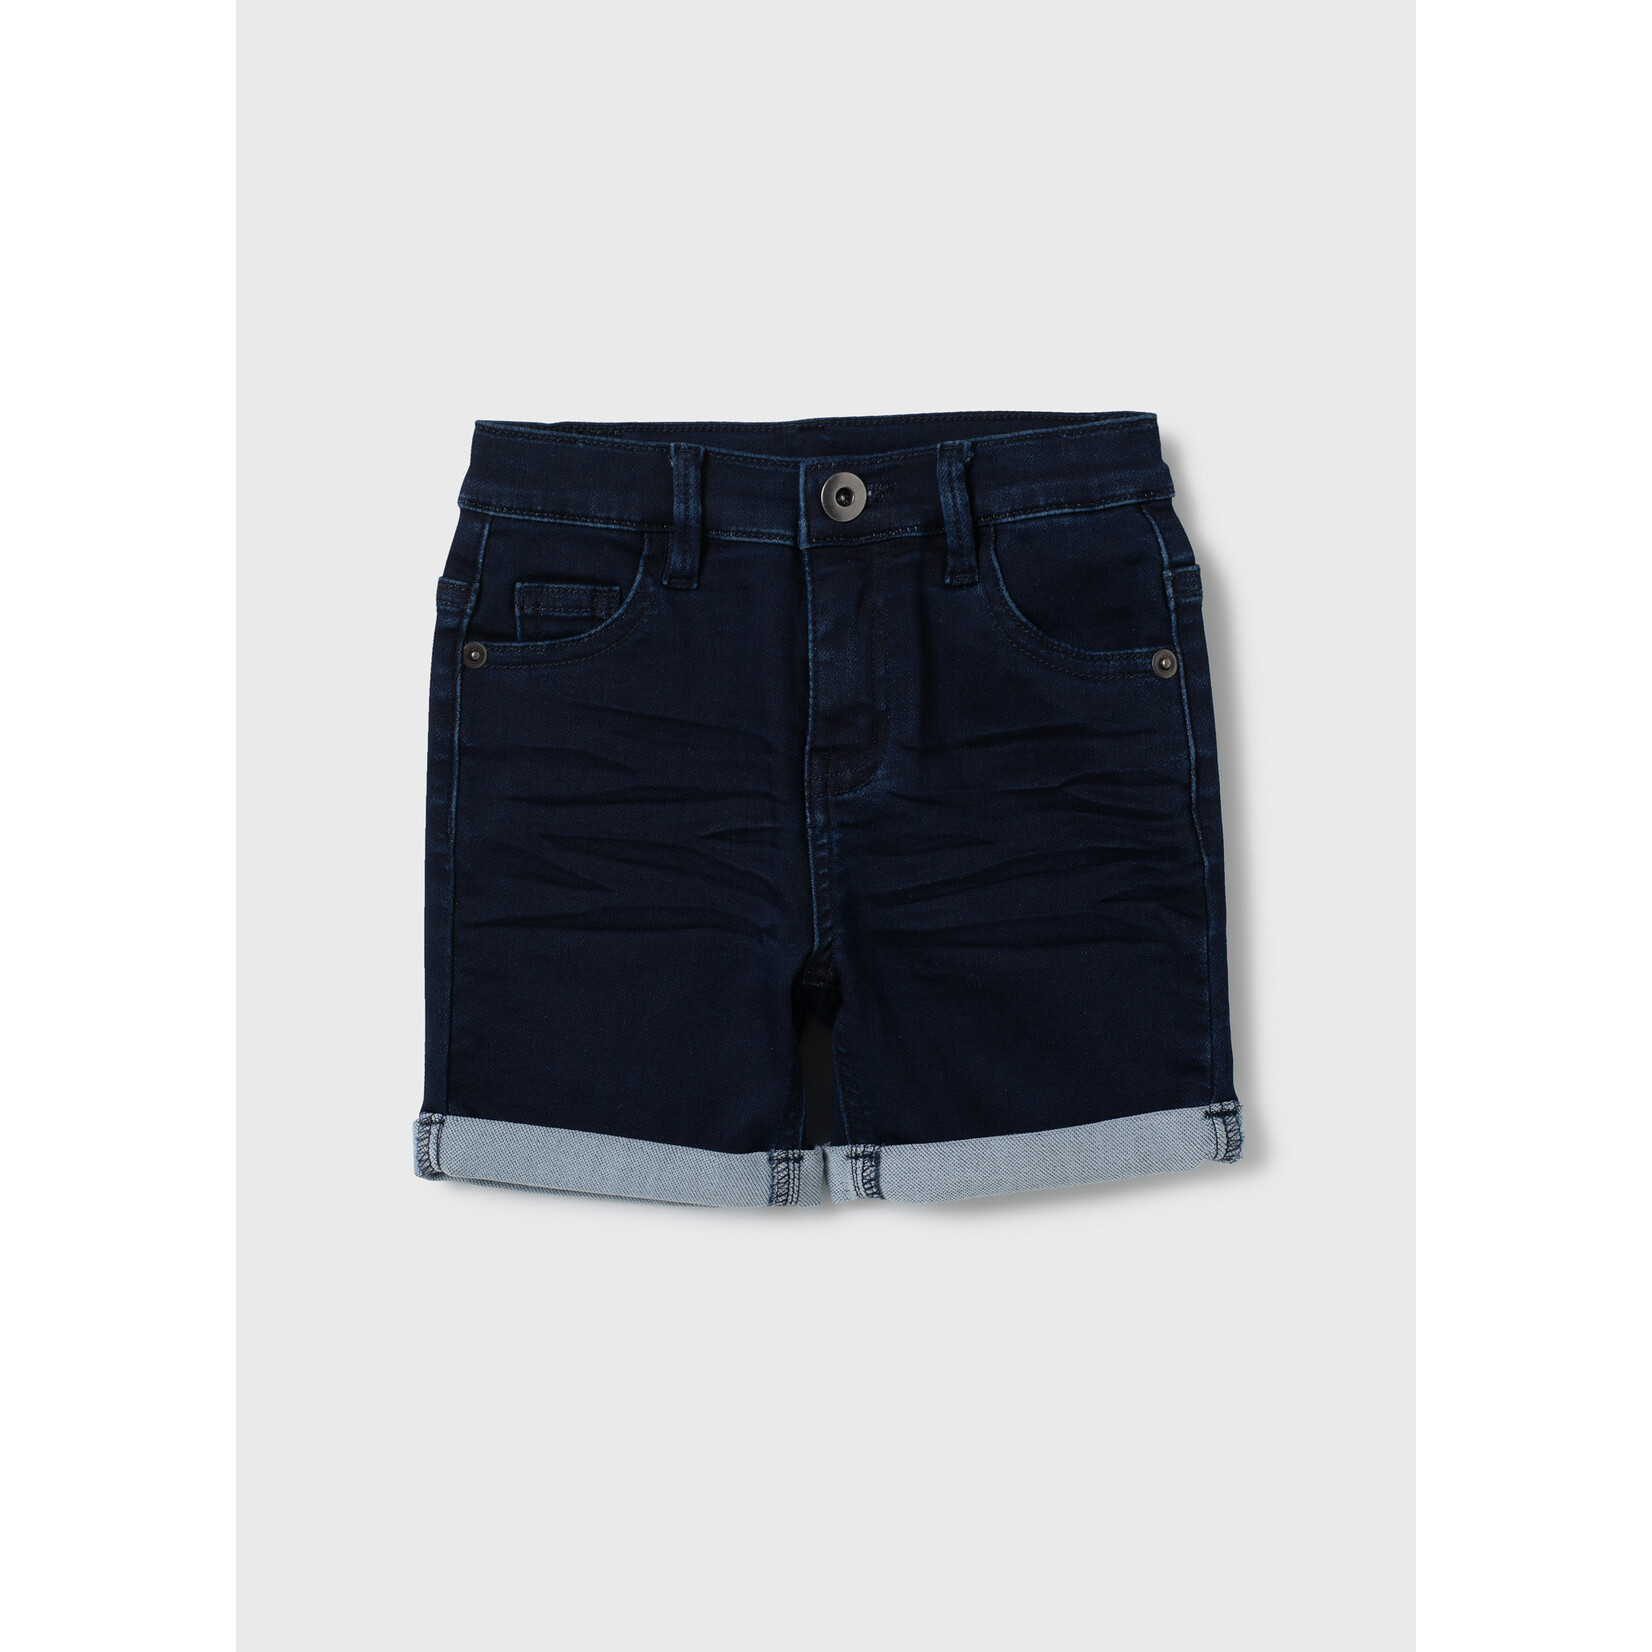 Northcoast NORTHCOAST - Dark Blue Stretch Denim Shorts